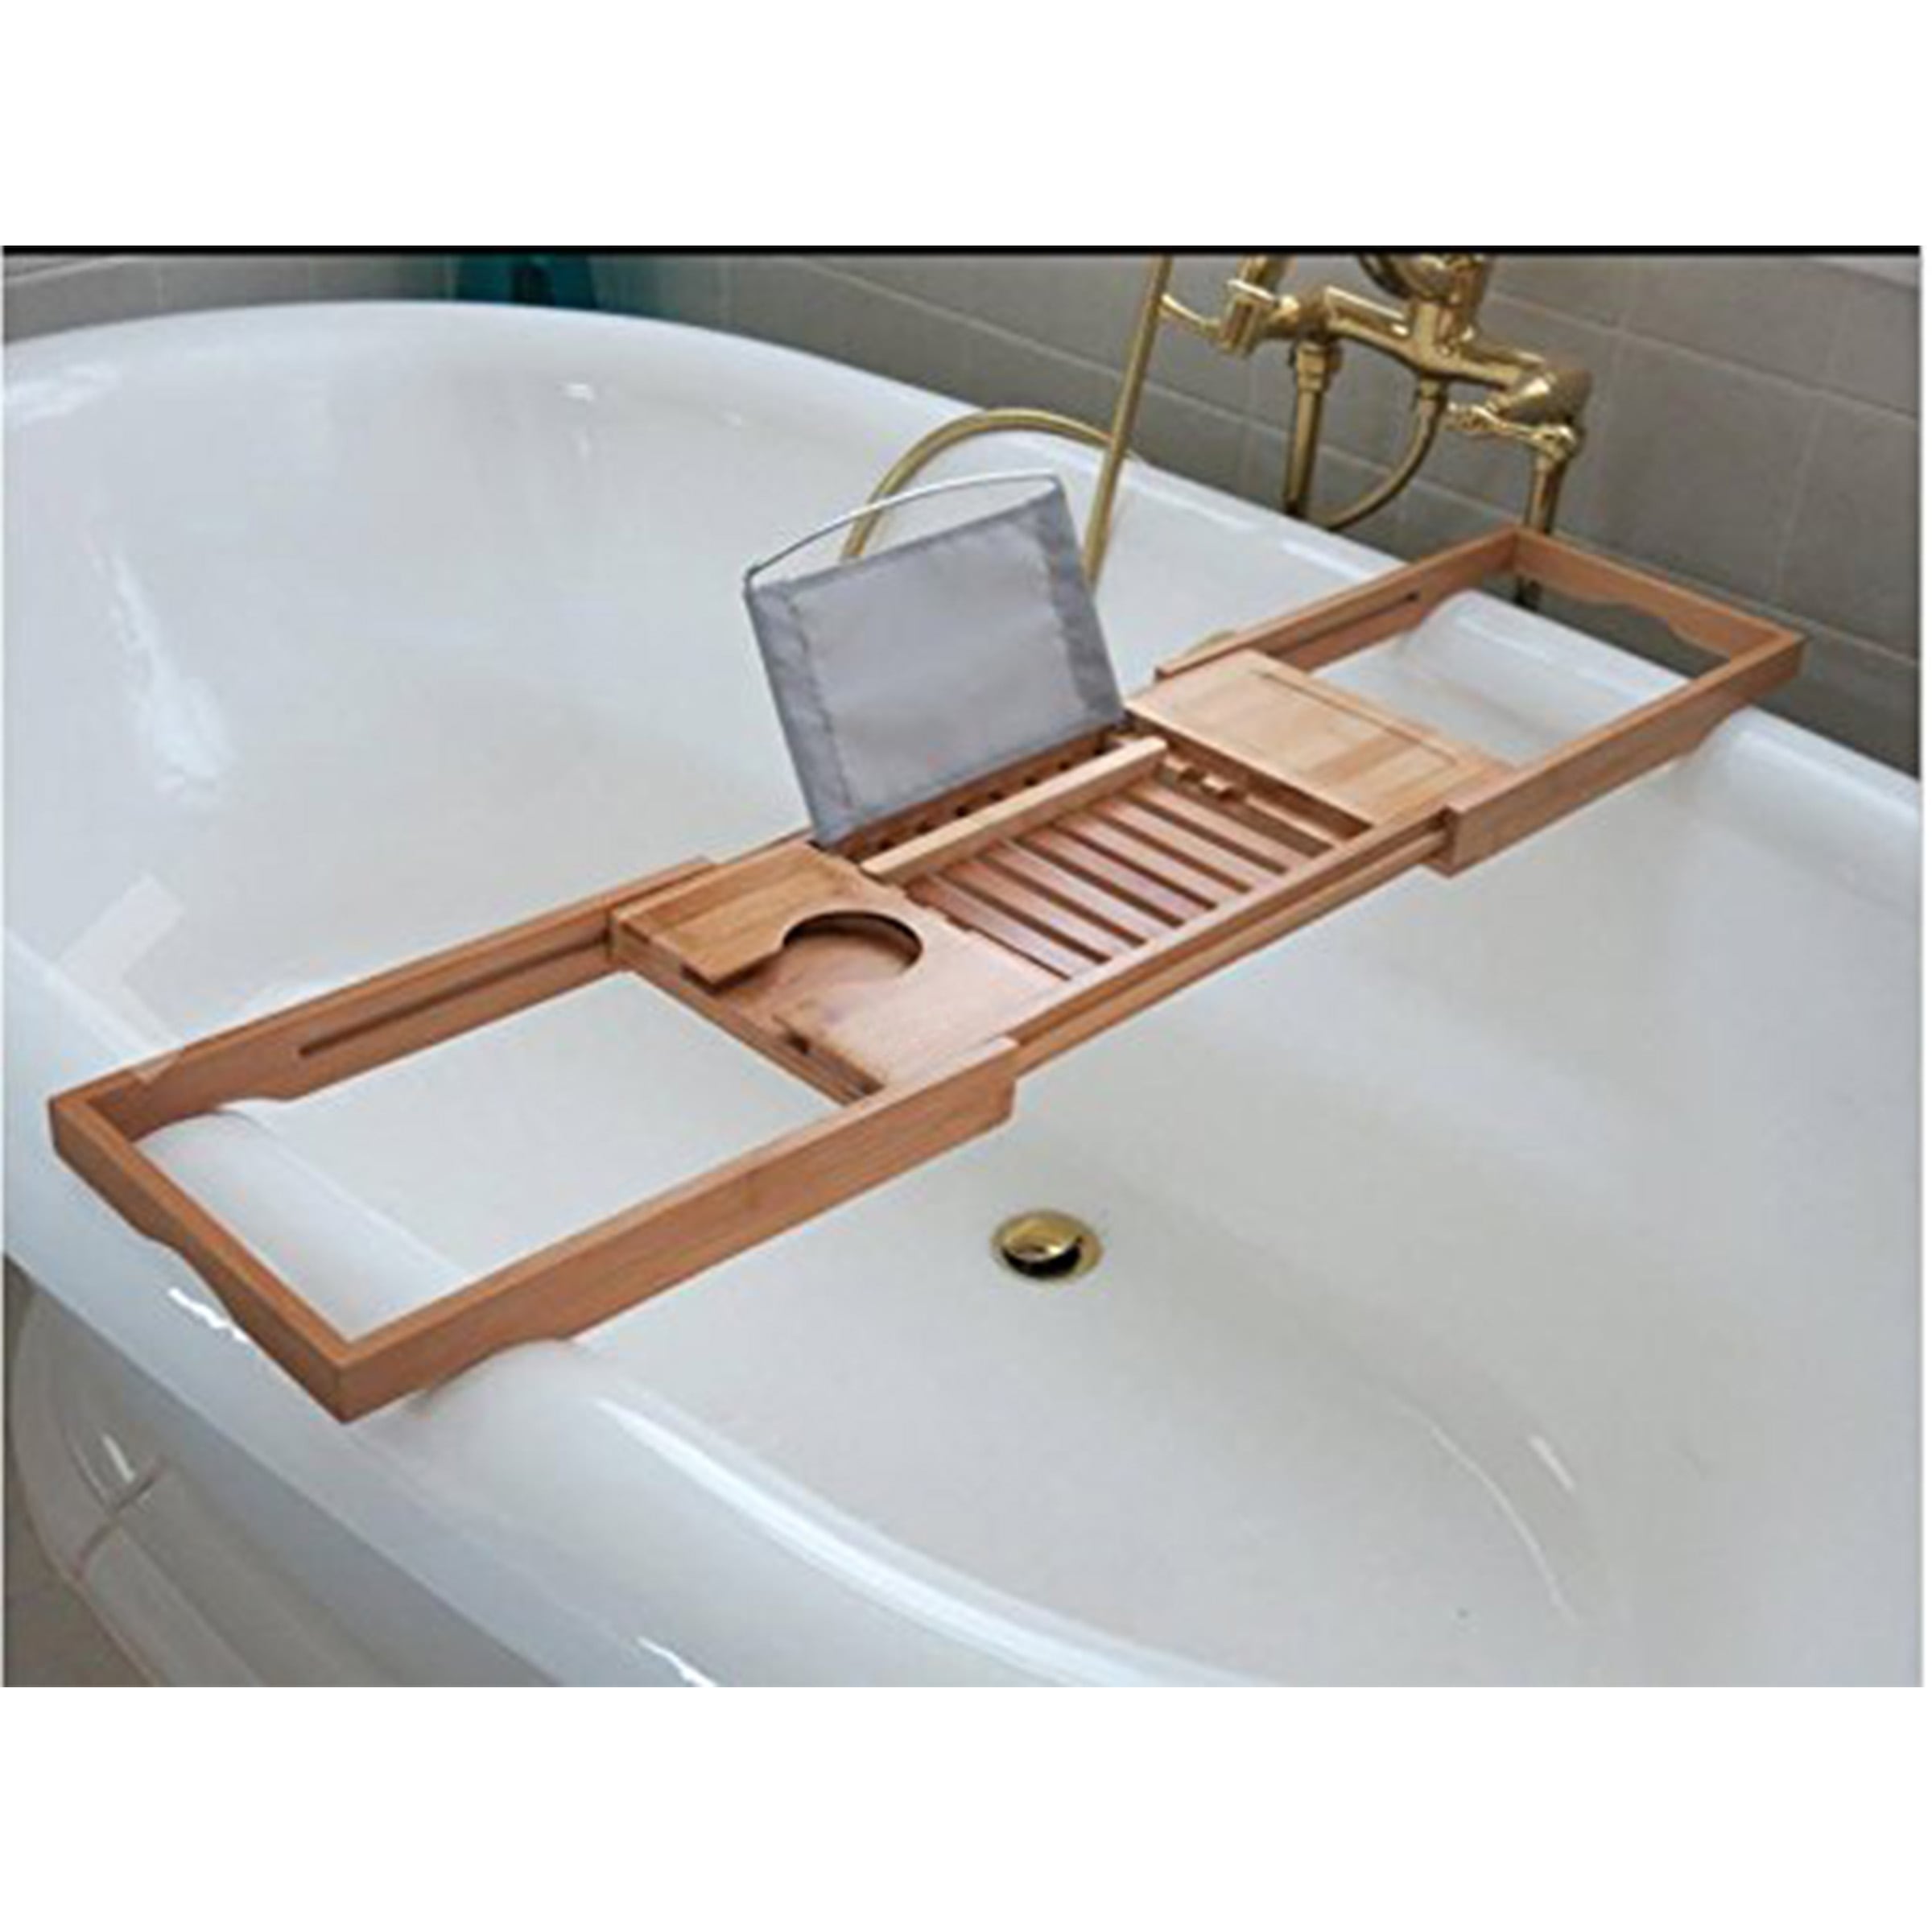 Vaiyer (2 Set) Bamboo Bathtub Tray Caddy Wooden Bath & Bed Tray